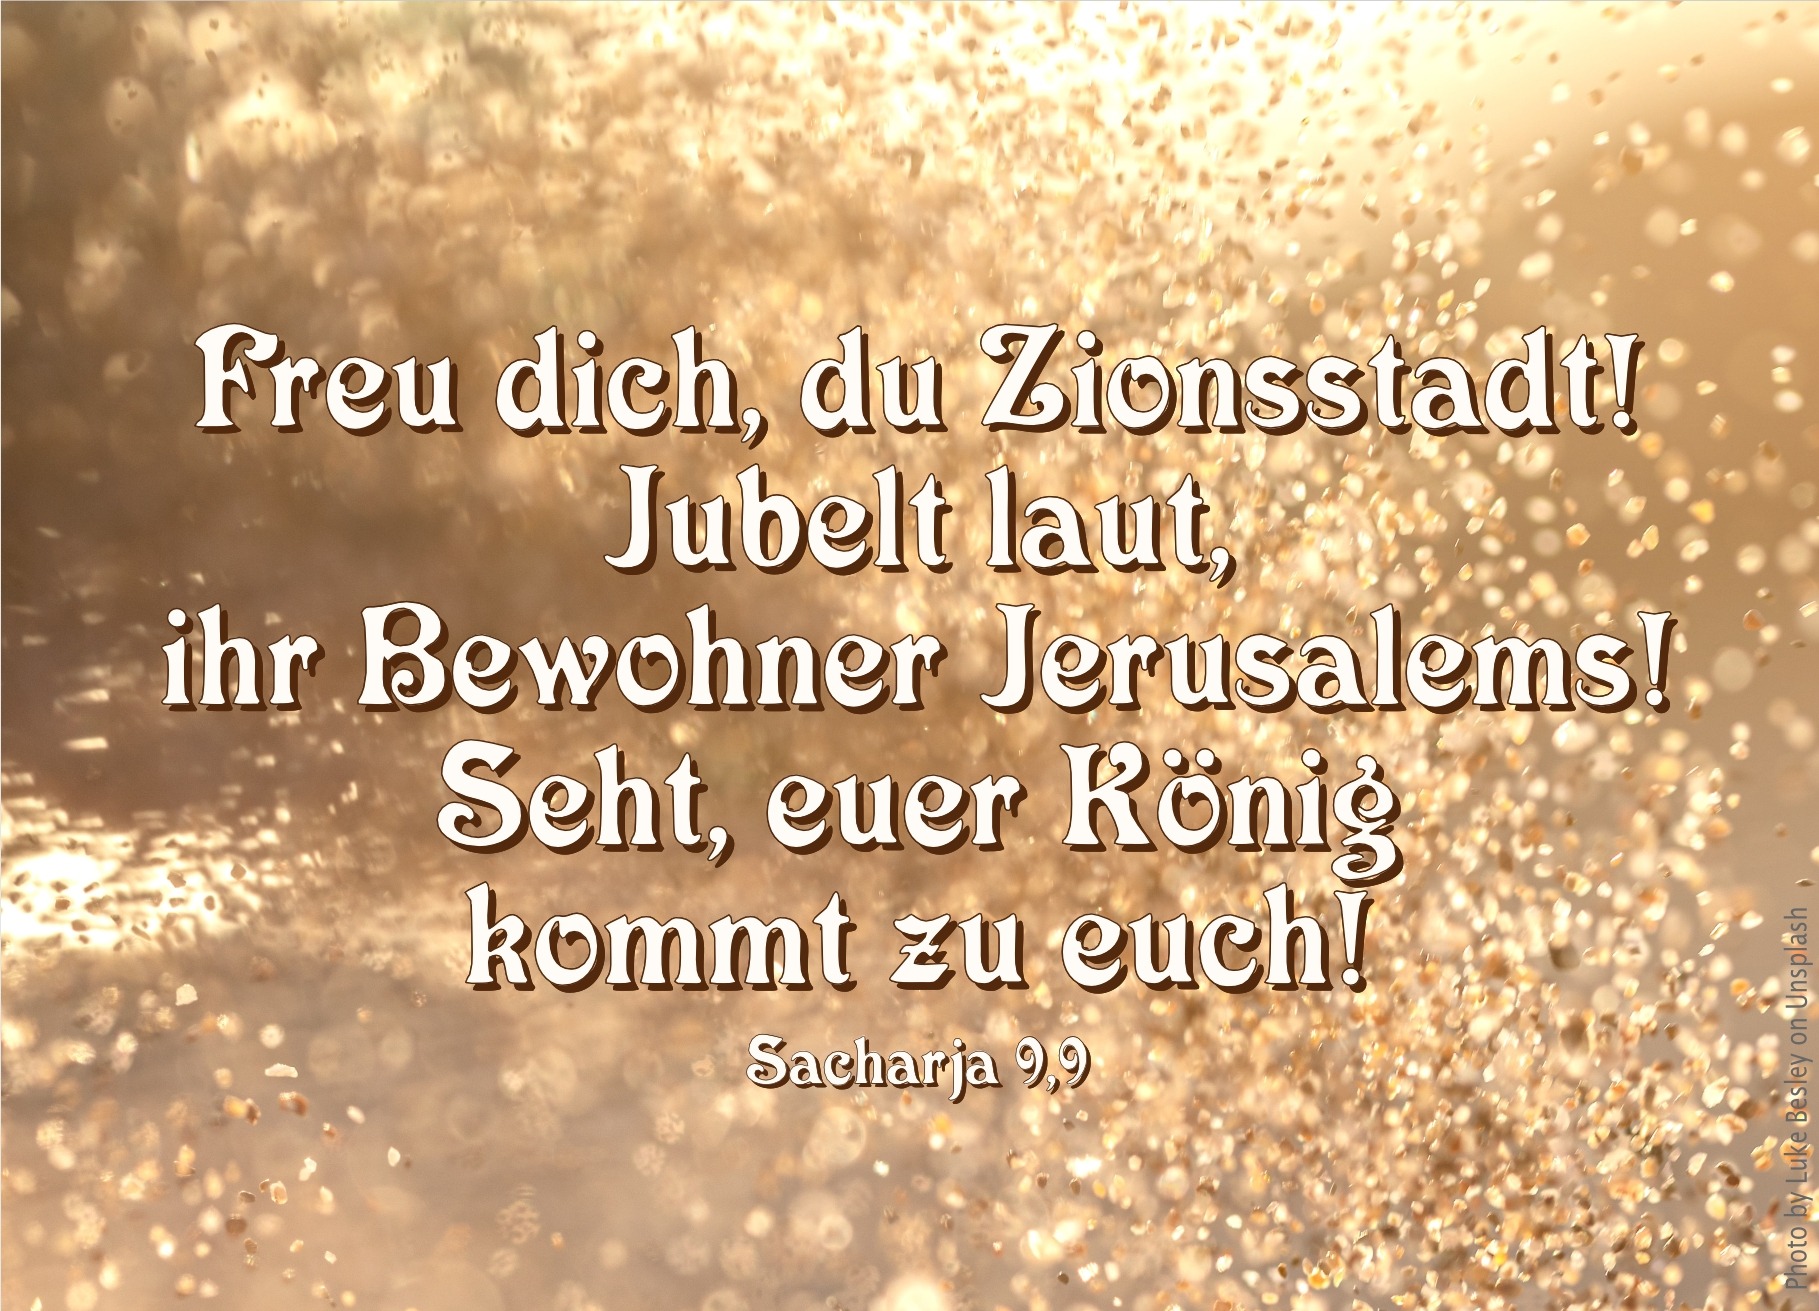 alt="goldenes_glitter_erwartet_bibelhoerbuch_hure_babylon_und_das_tier"